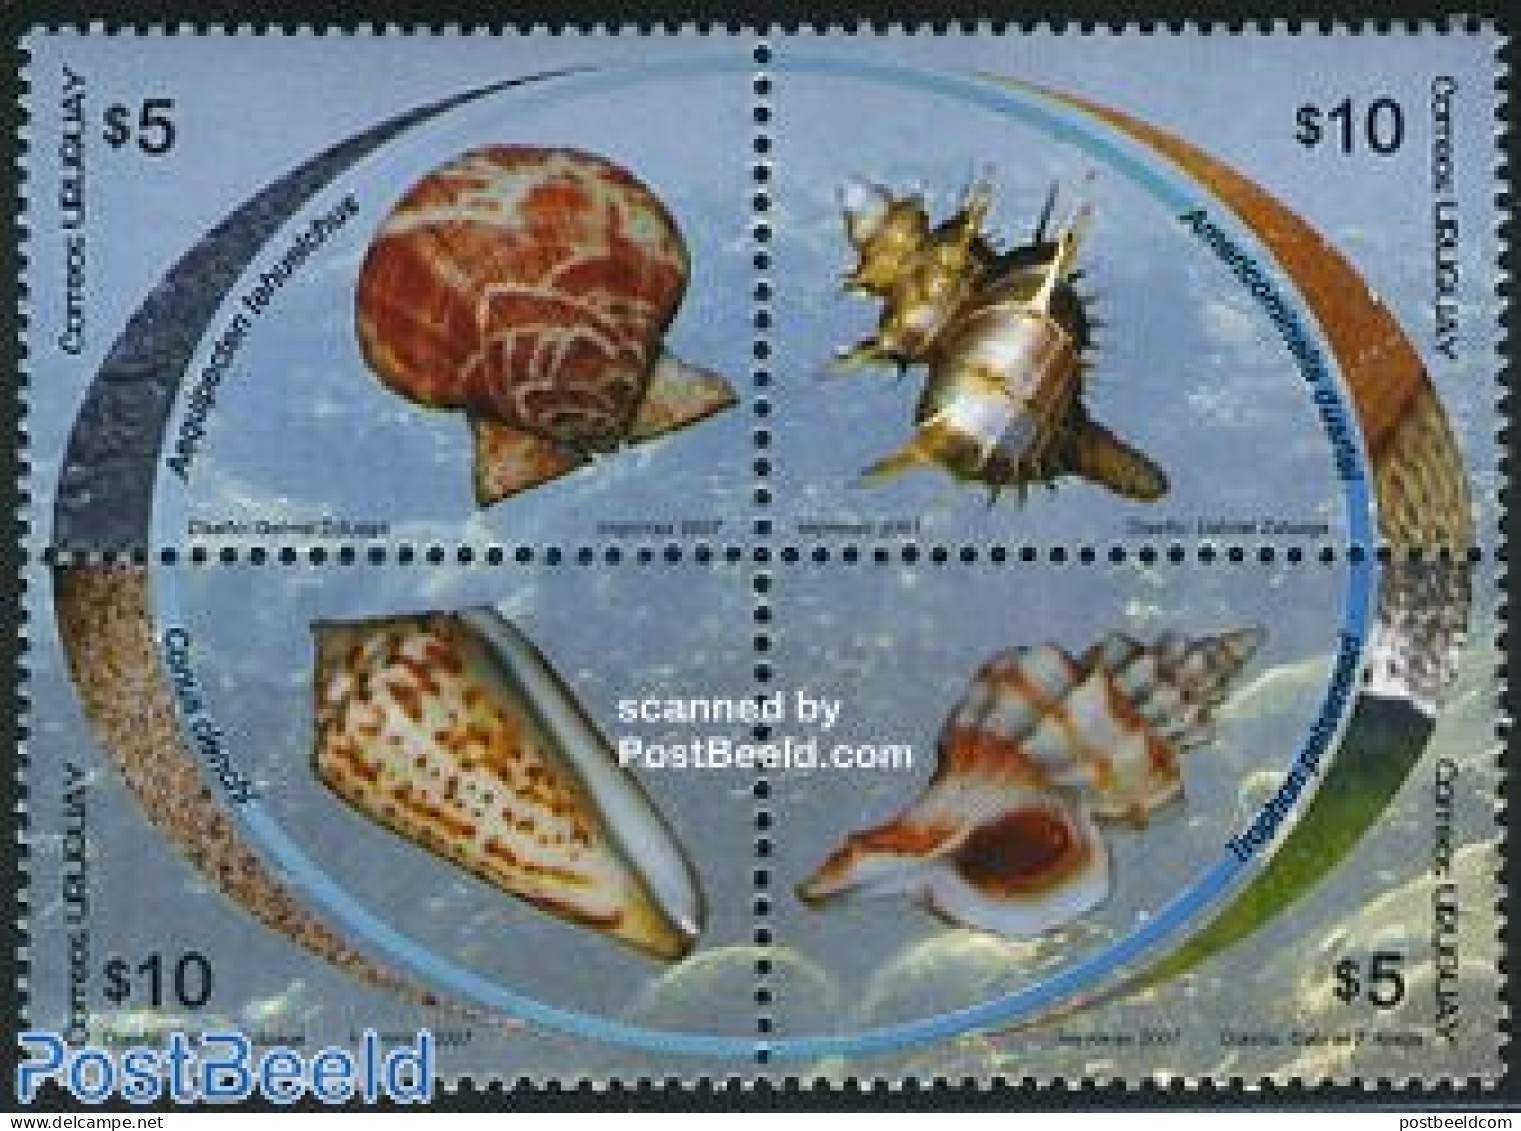 Uruguay 2007 Shells 4v [+], Mint NH, Nature - Shells & Crustaceans - Vie Marine